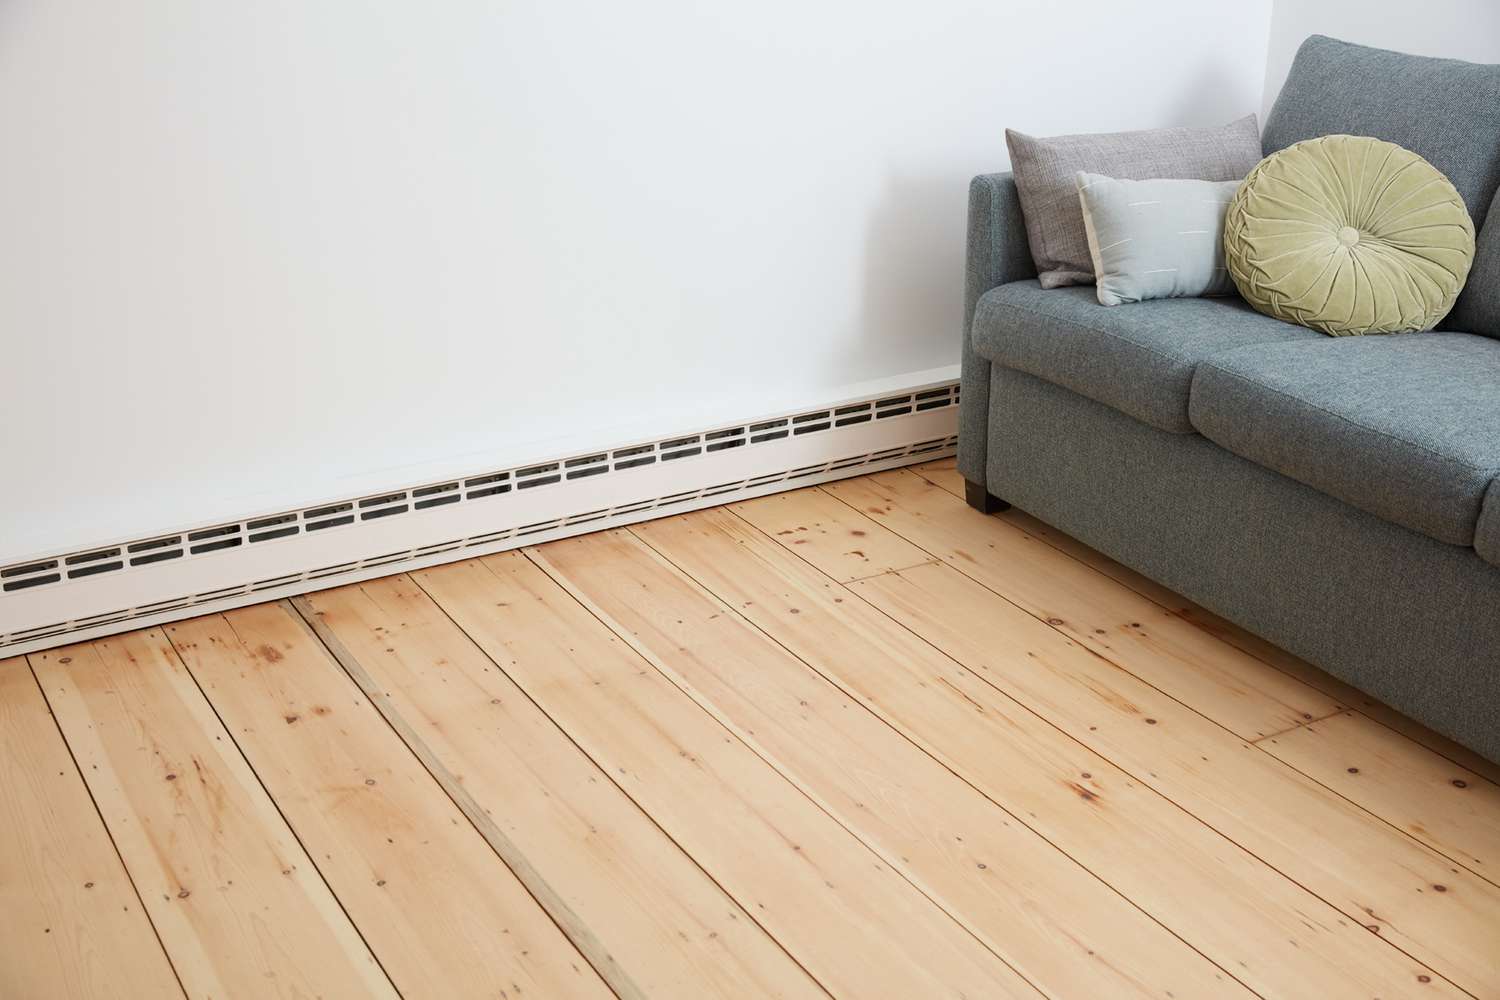 How to Arrange Furniture around Baseboard Heaters